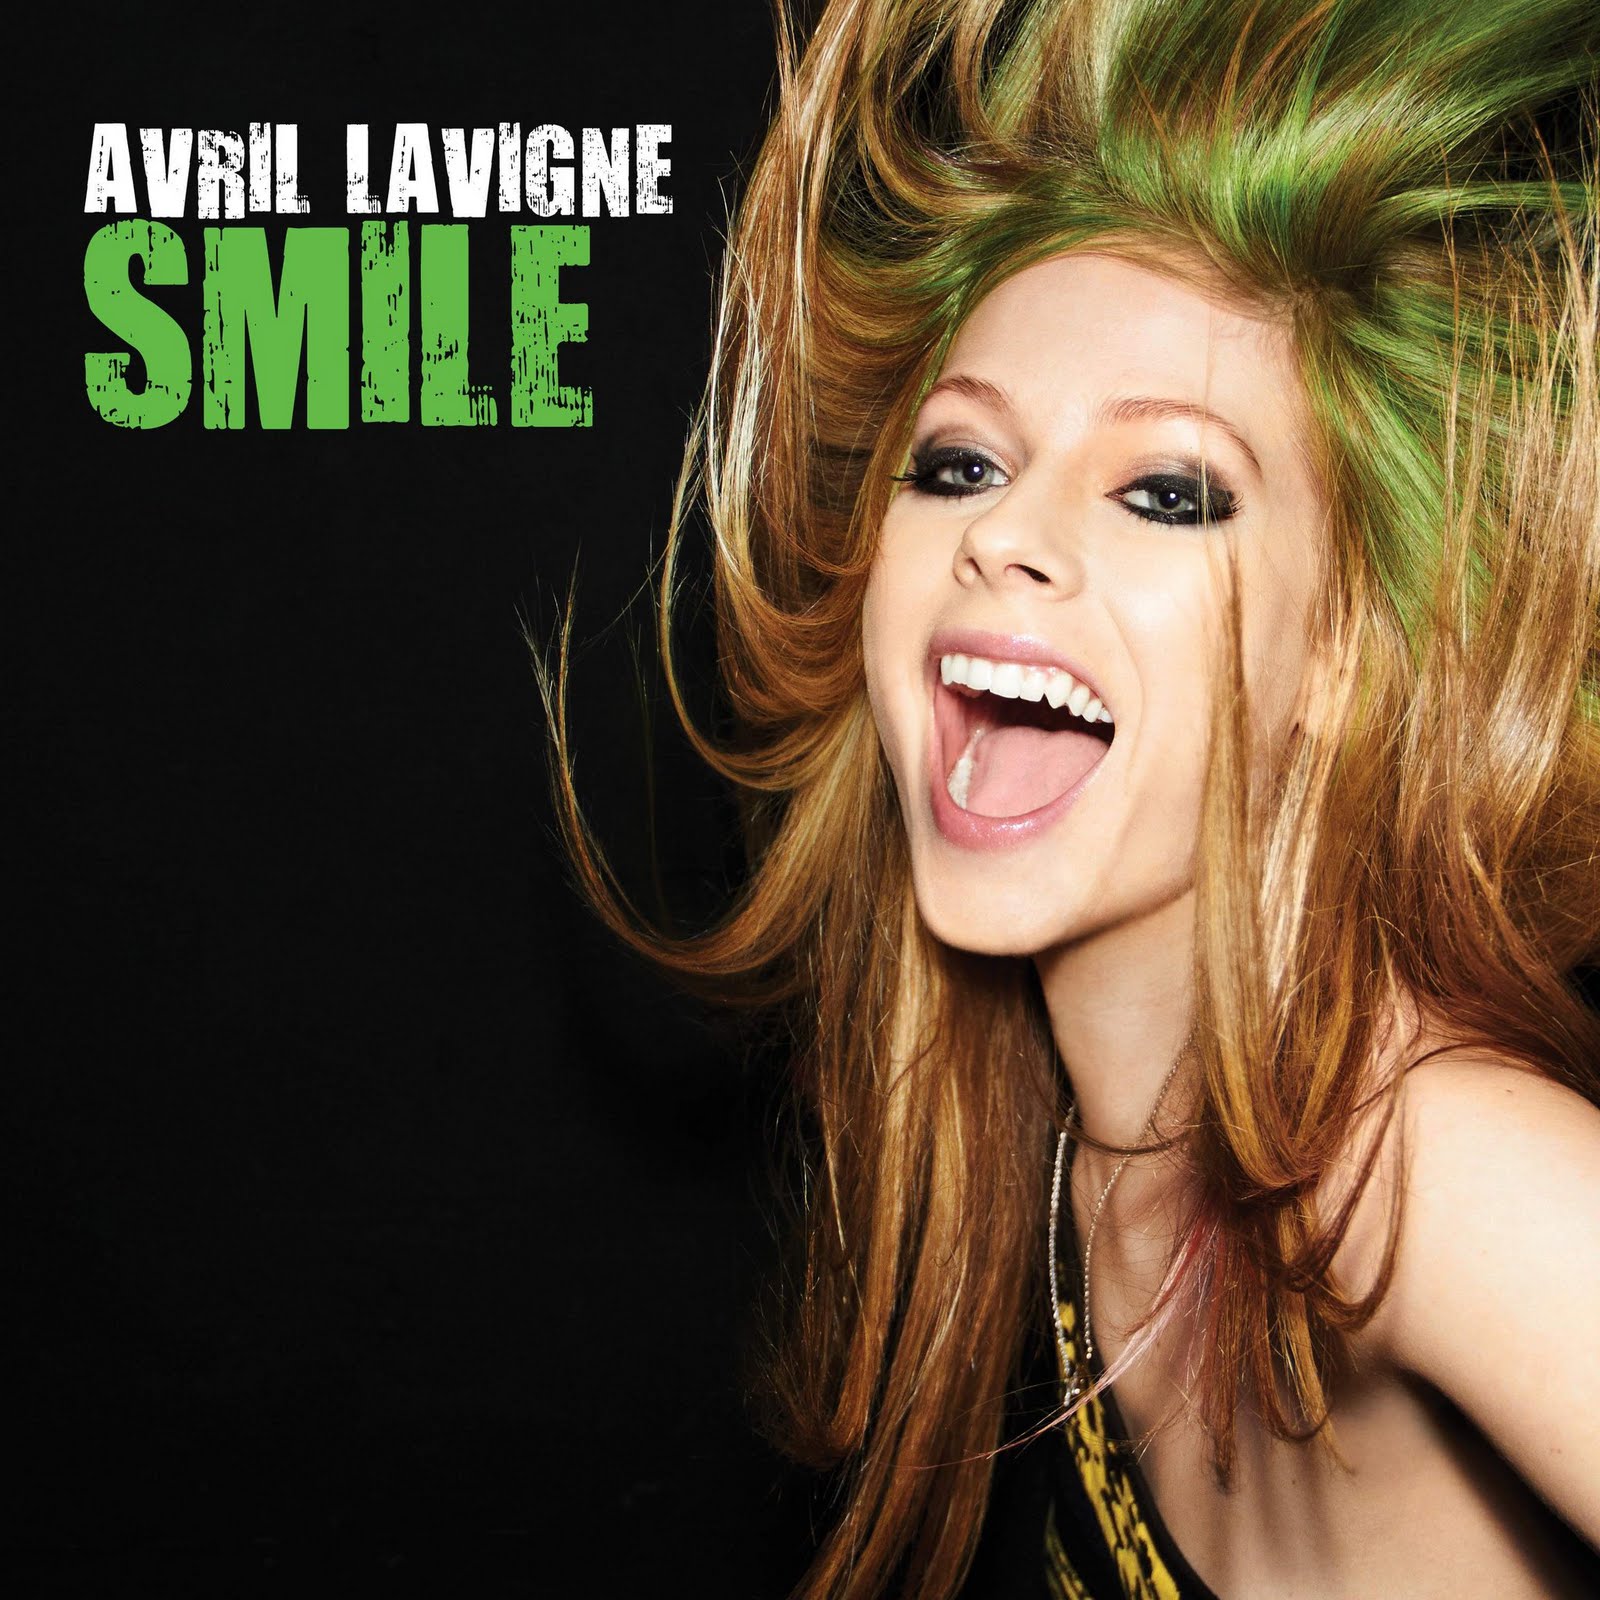 http://4.bp.blogspot.com/-zjHjN7Z6Mbw/TcviO0j2thI/AAAAAAAAA5M/gO155wD-Fbw/s1600/AvrilLavigne-Smile_cover.jpg